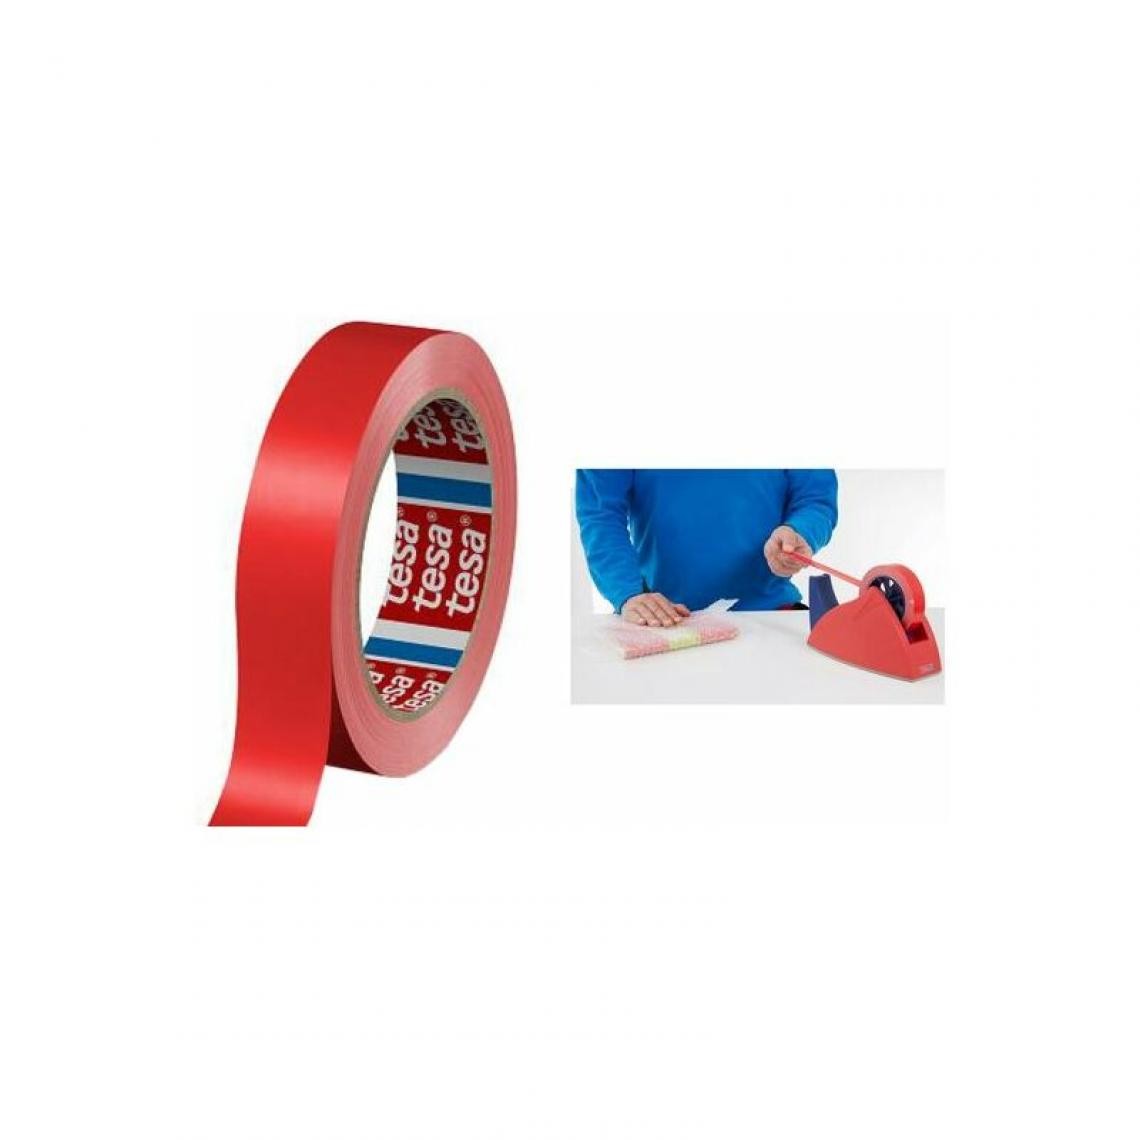 Tesa - tesa Ruban adhésif d'emballage 60404, 19 mm x 66 m, rouge () - Adhésif d'emballage